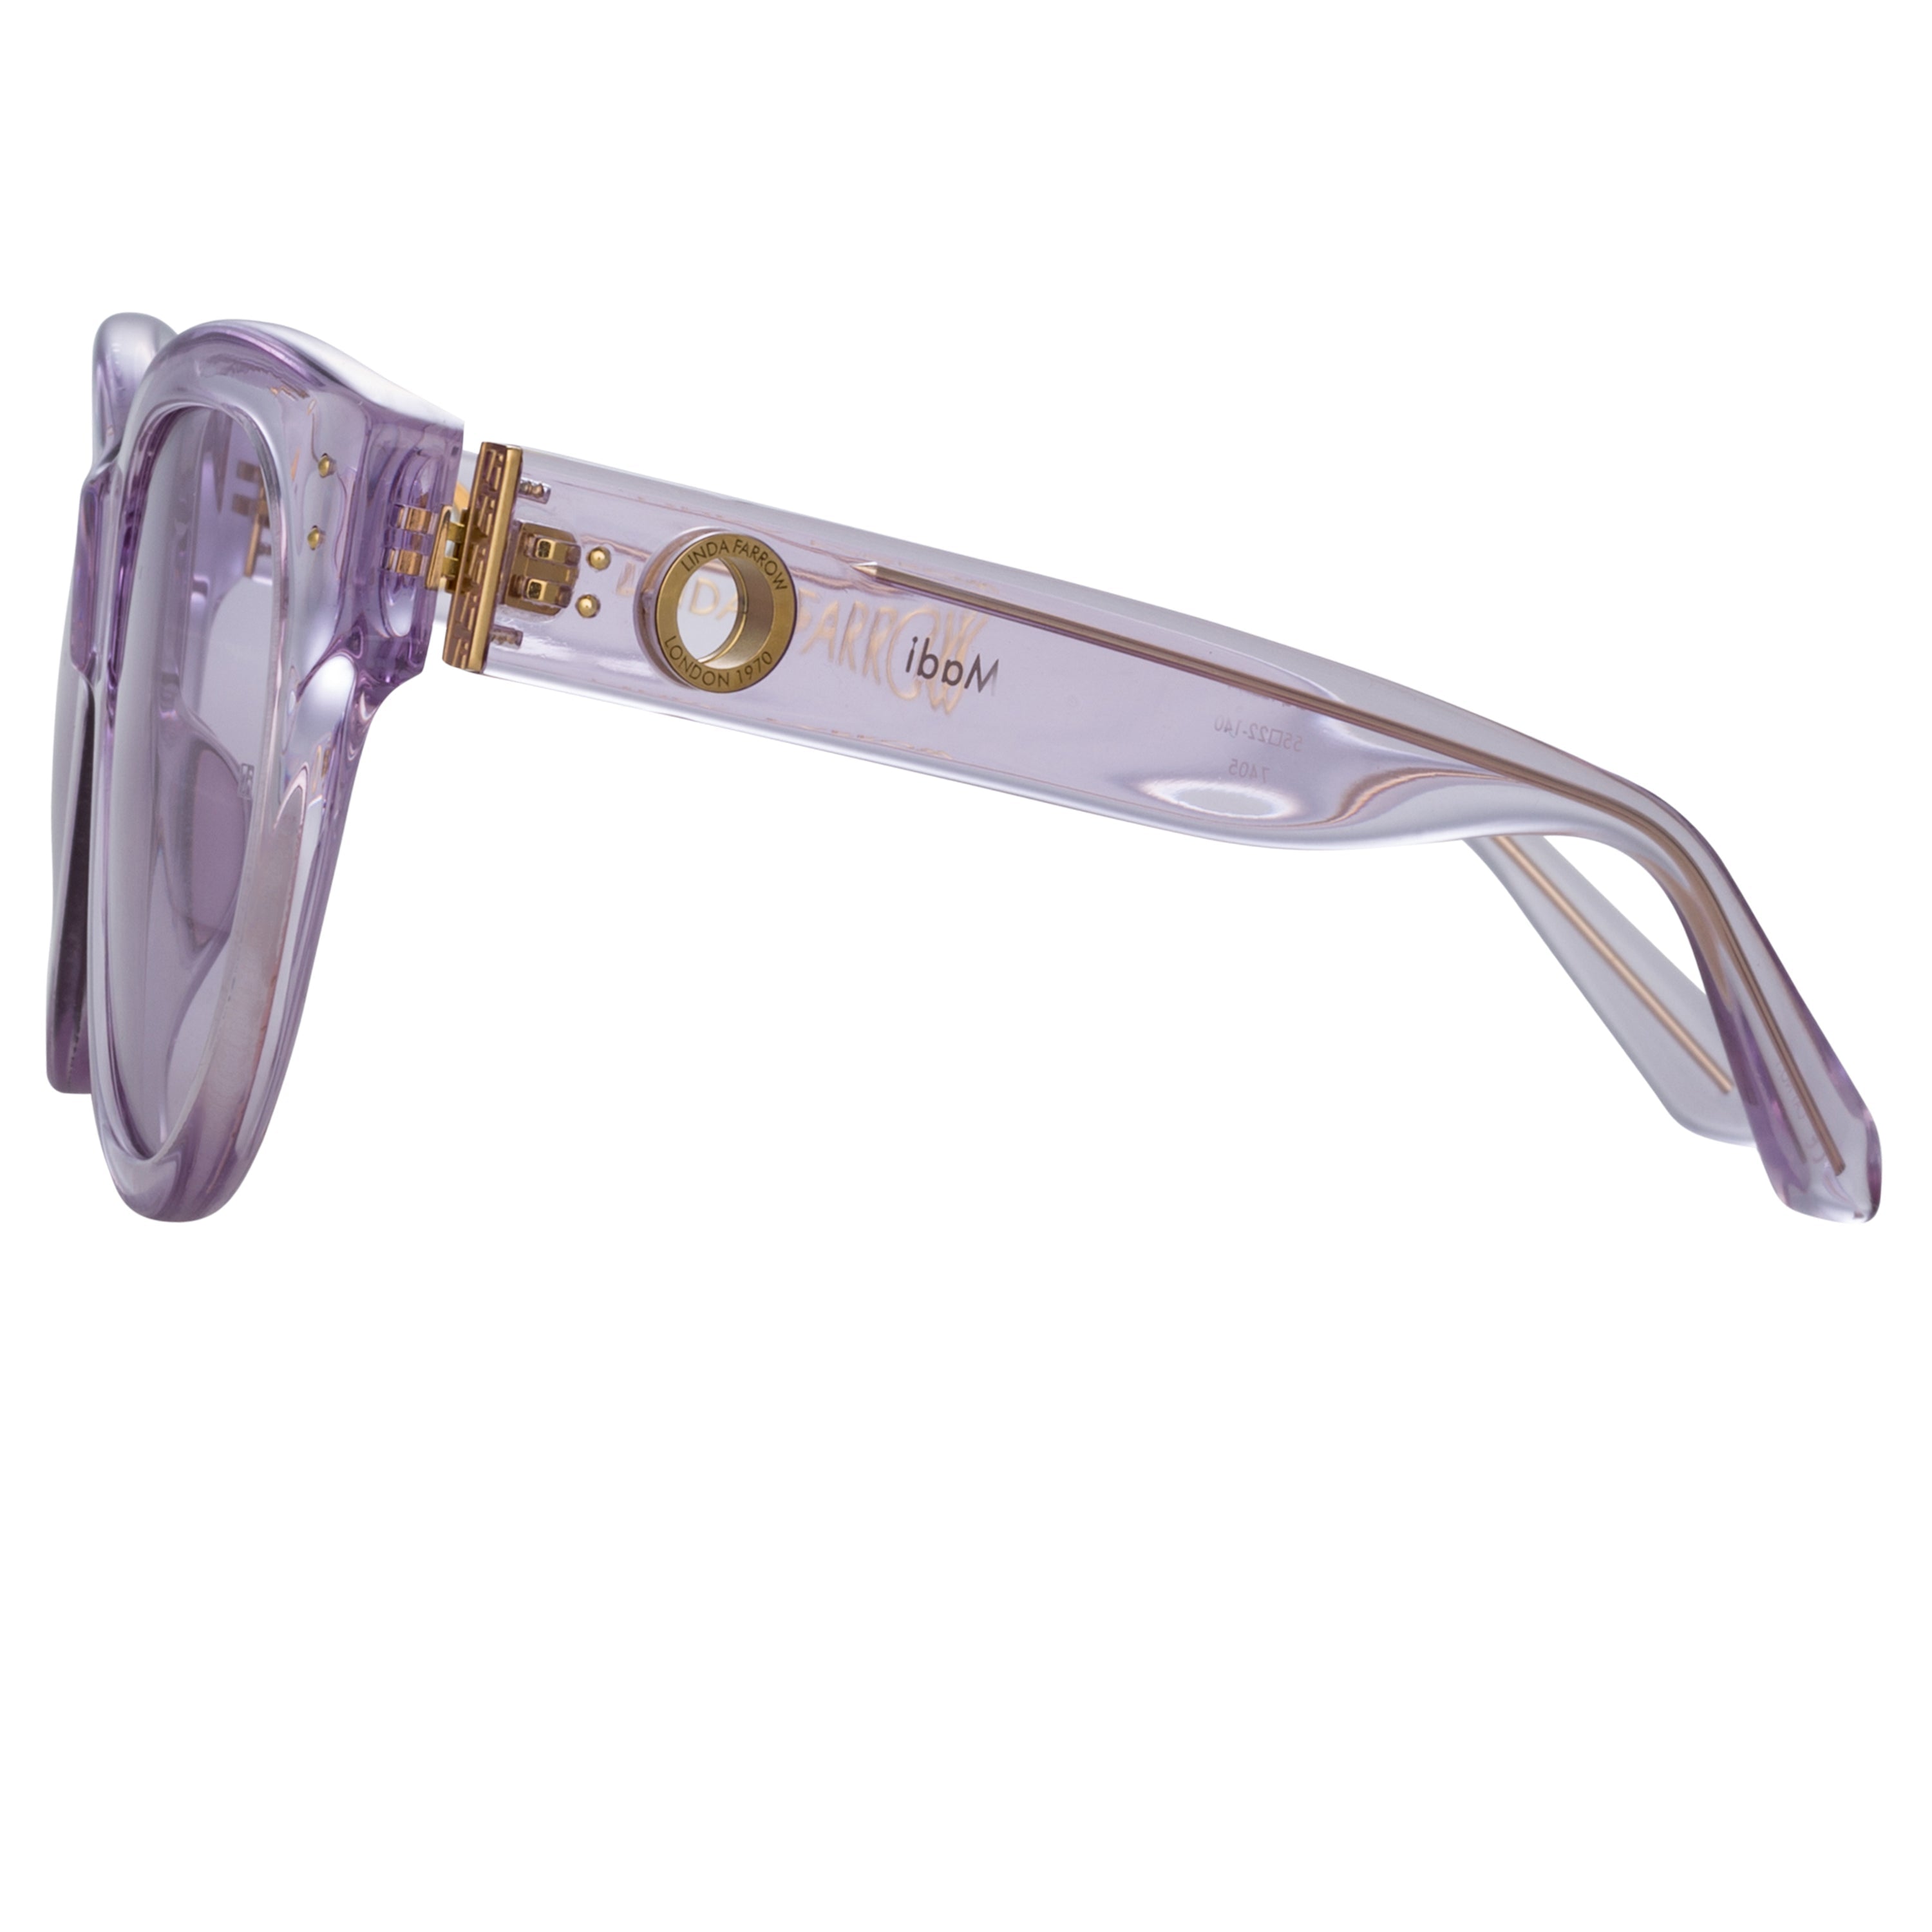 Color_LFL1257C4SUN - Madi Oversized Sunglasses in Lilac